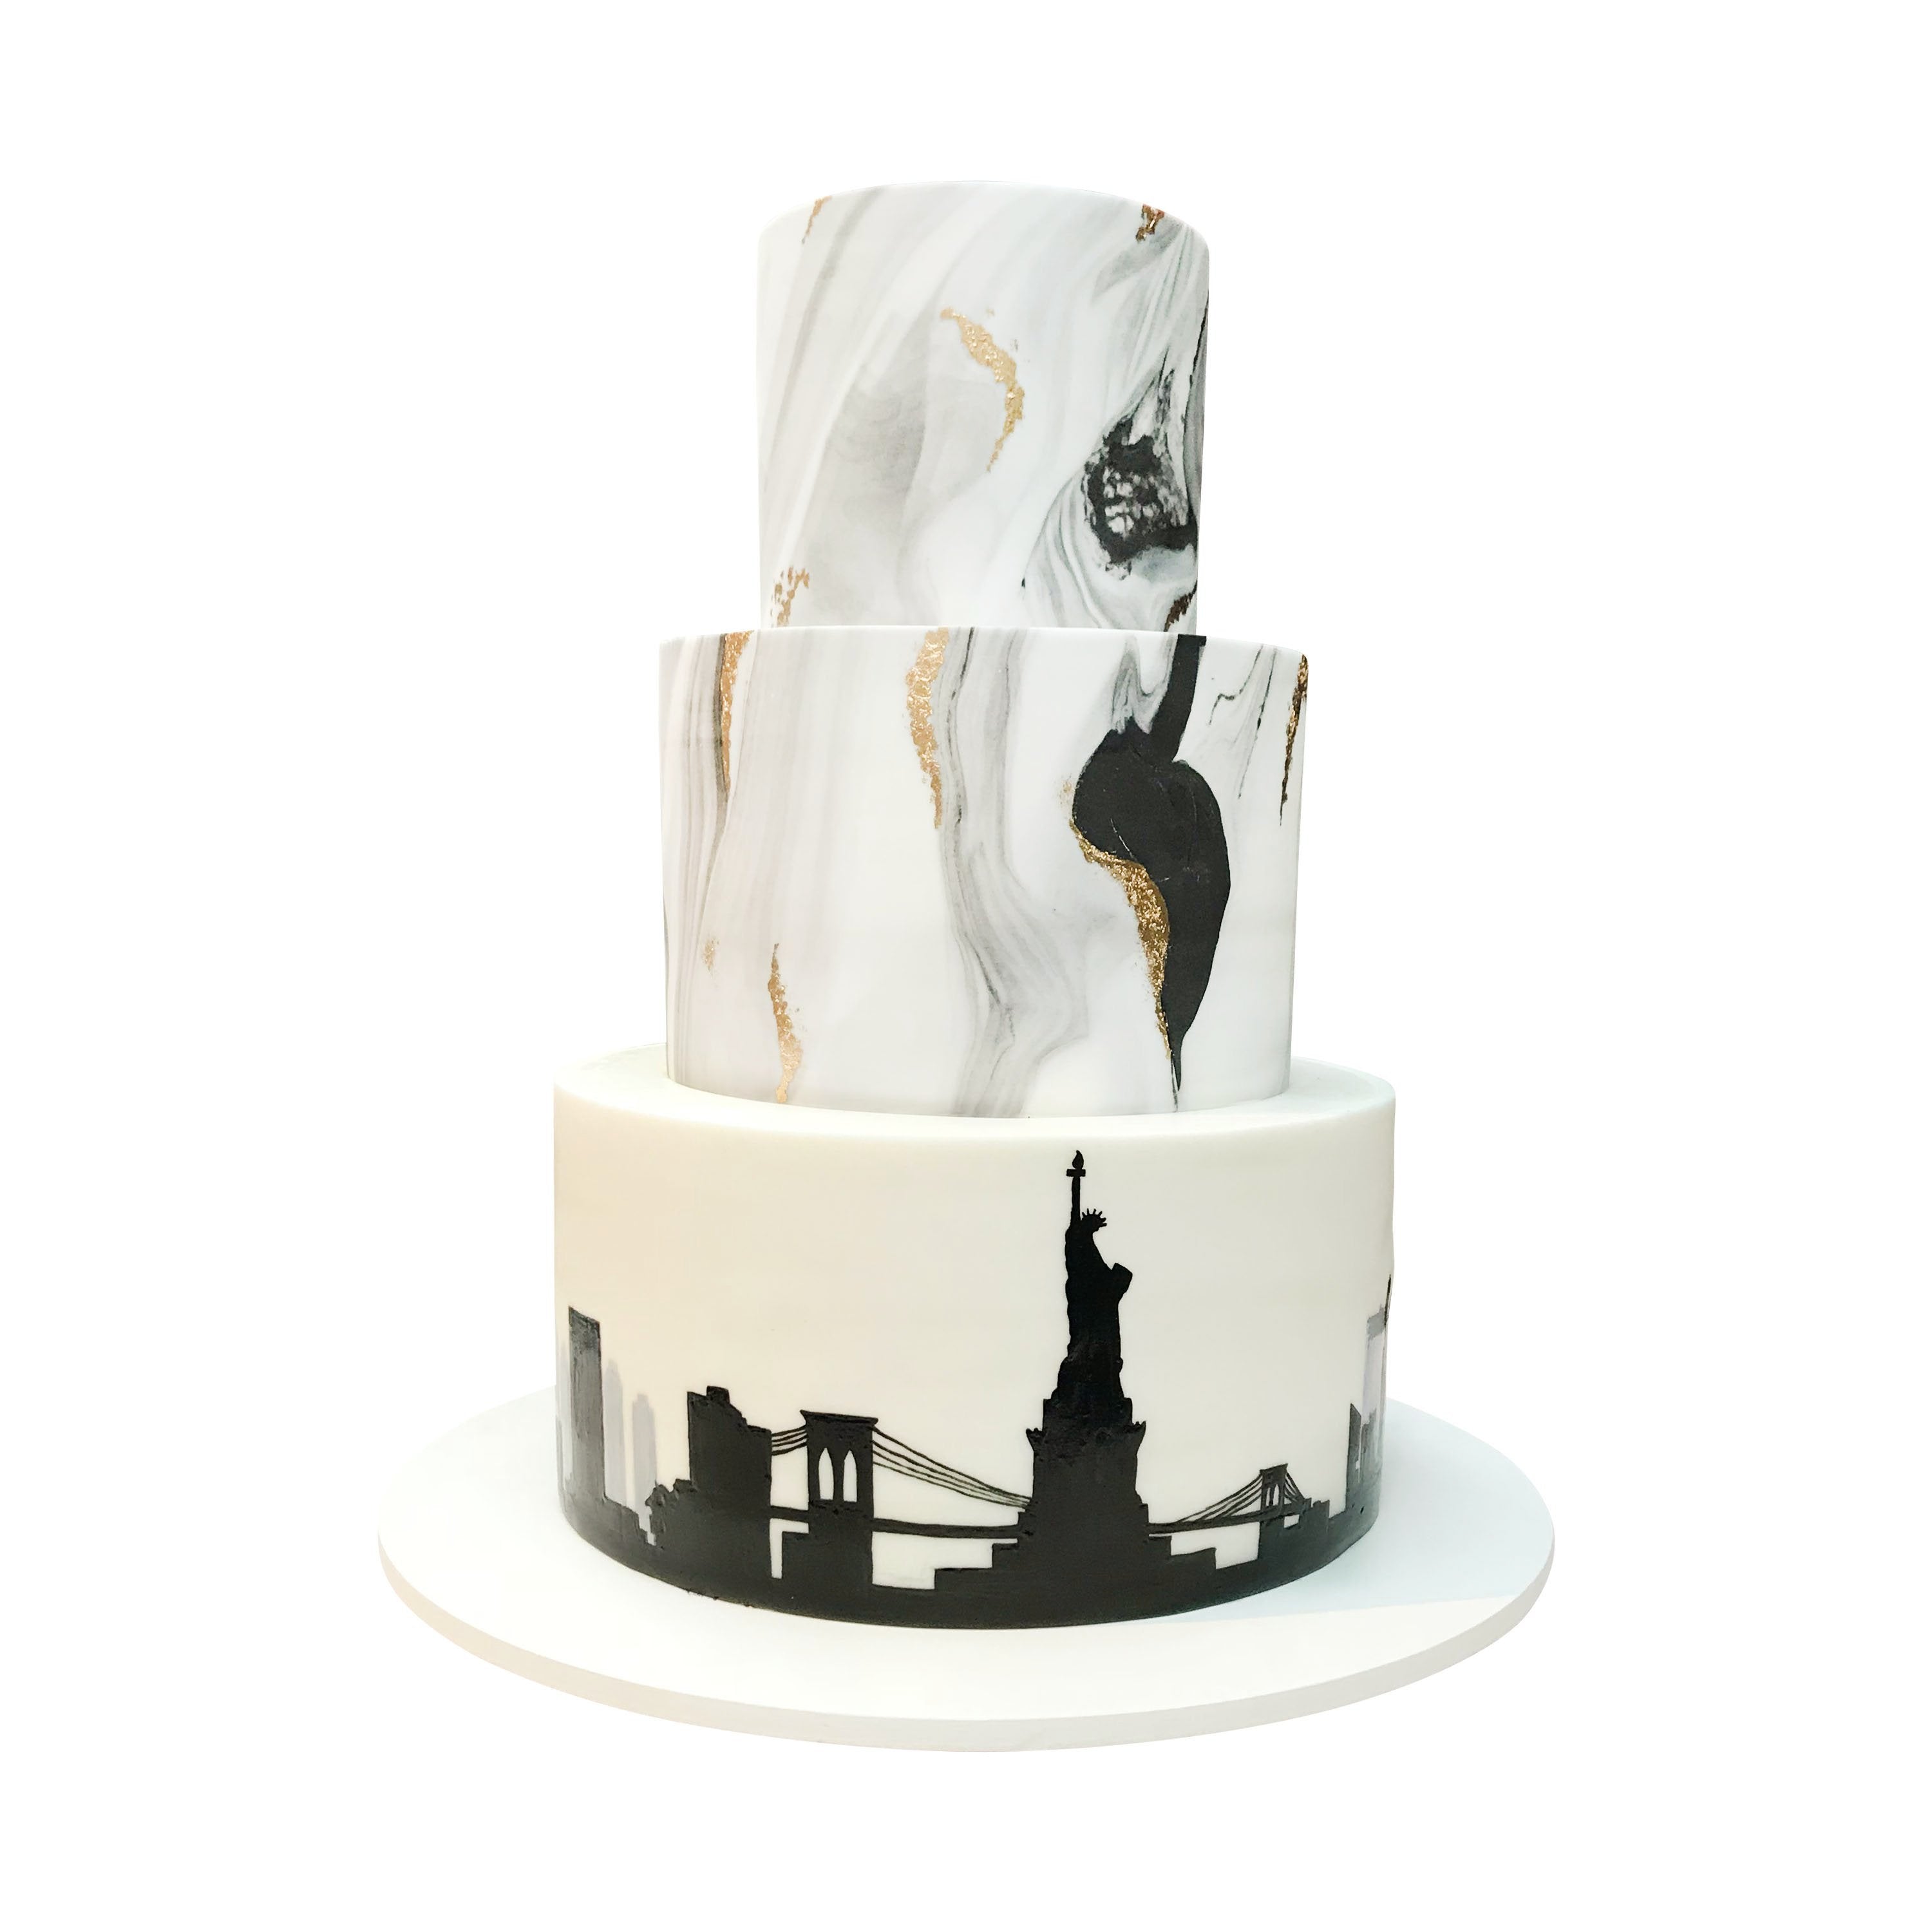 I finally made THE cake dudes #29schmitdnewgirl#29#birthdaycake#newgir... |  TikTok